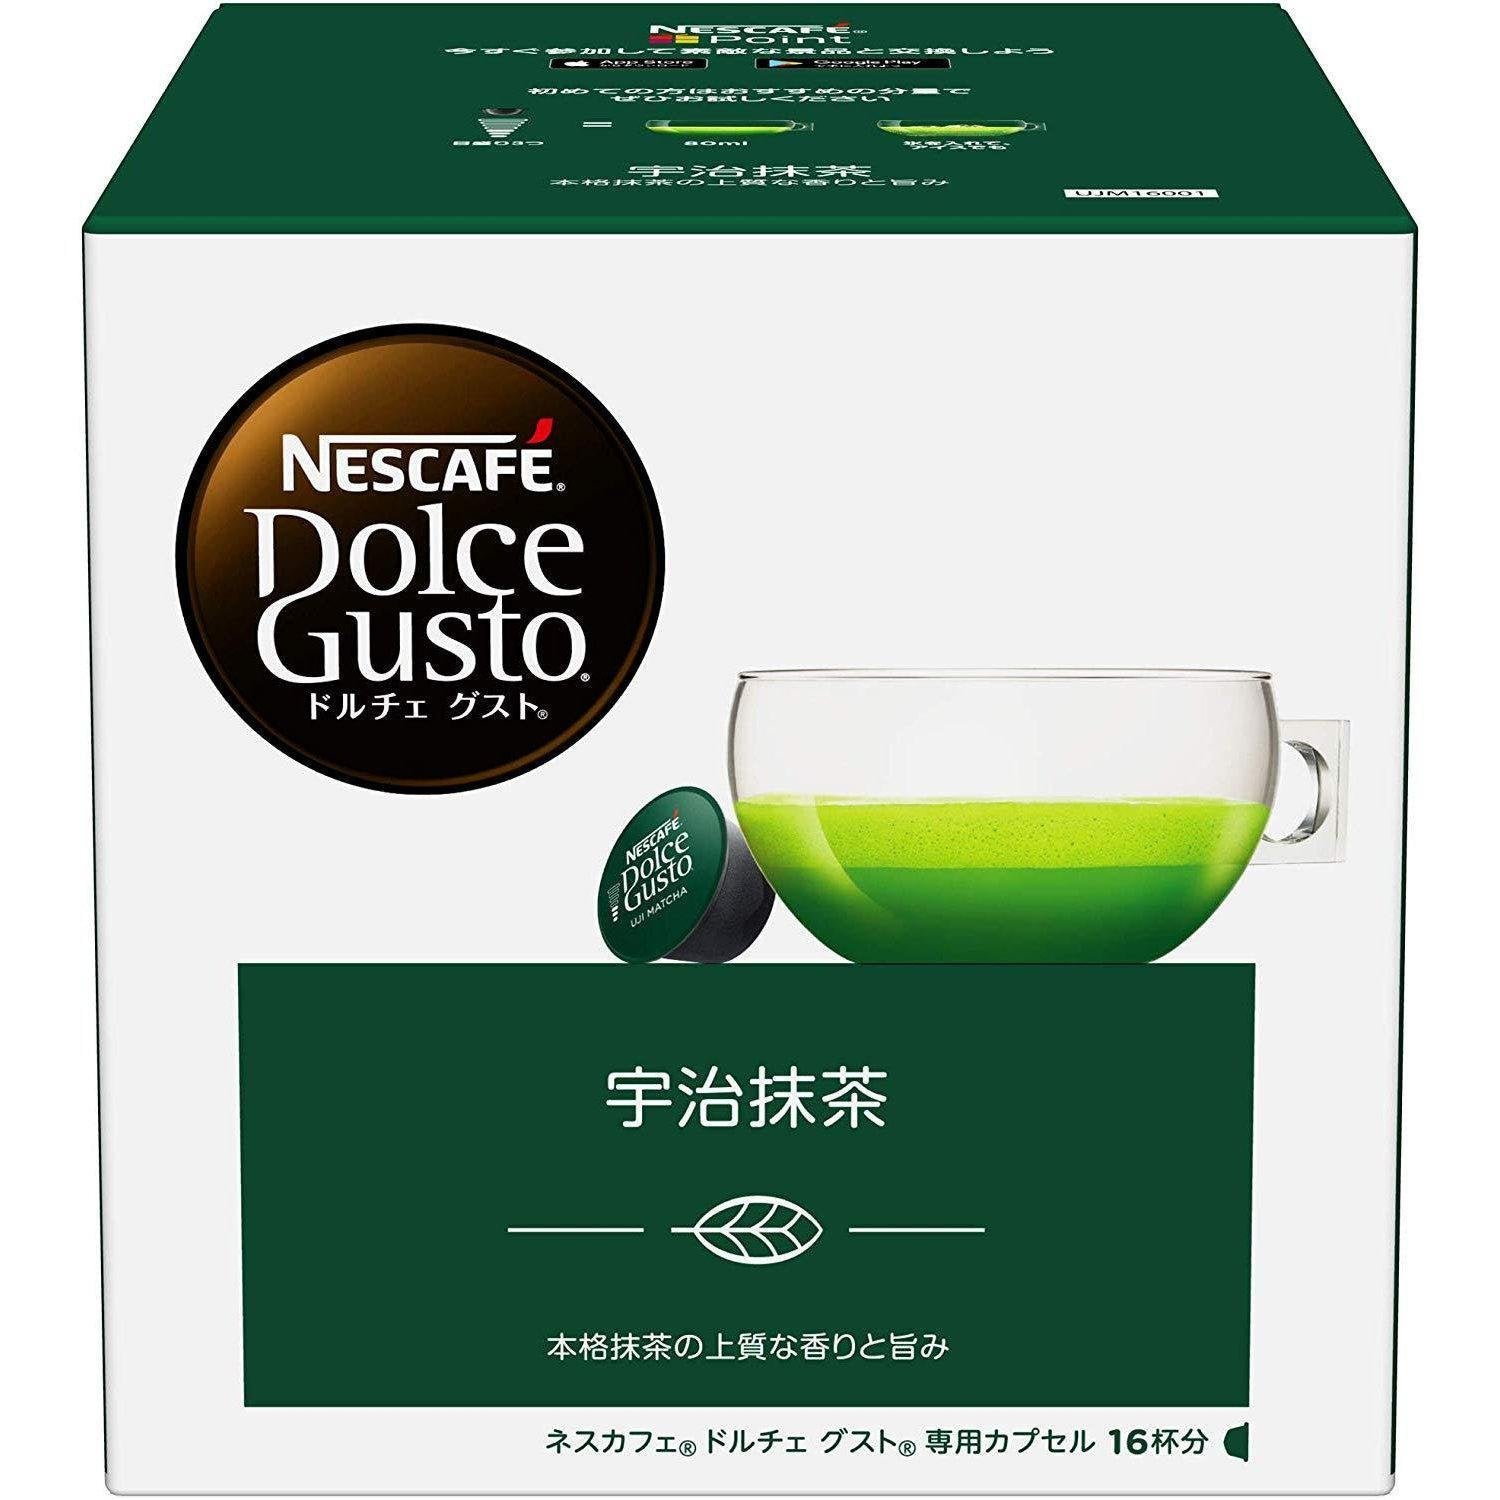 Nescafé Dolce Gusto Capsules Matcha Green Tea 16 Pods